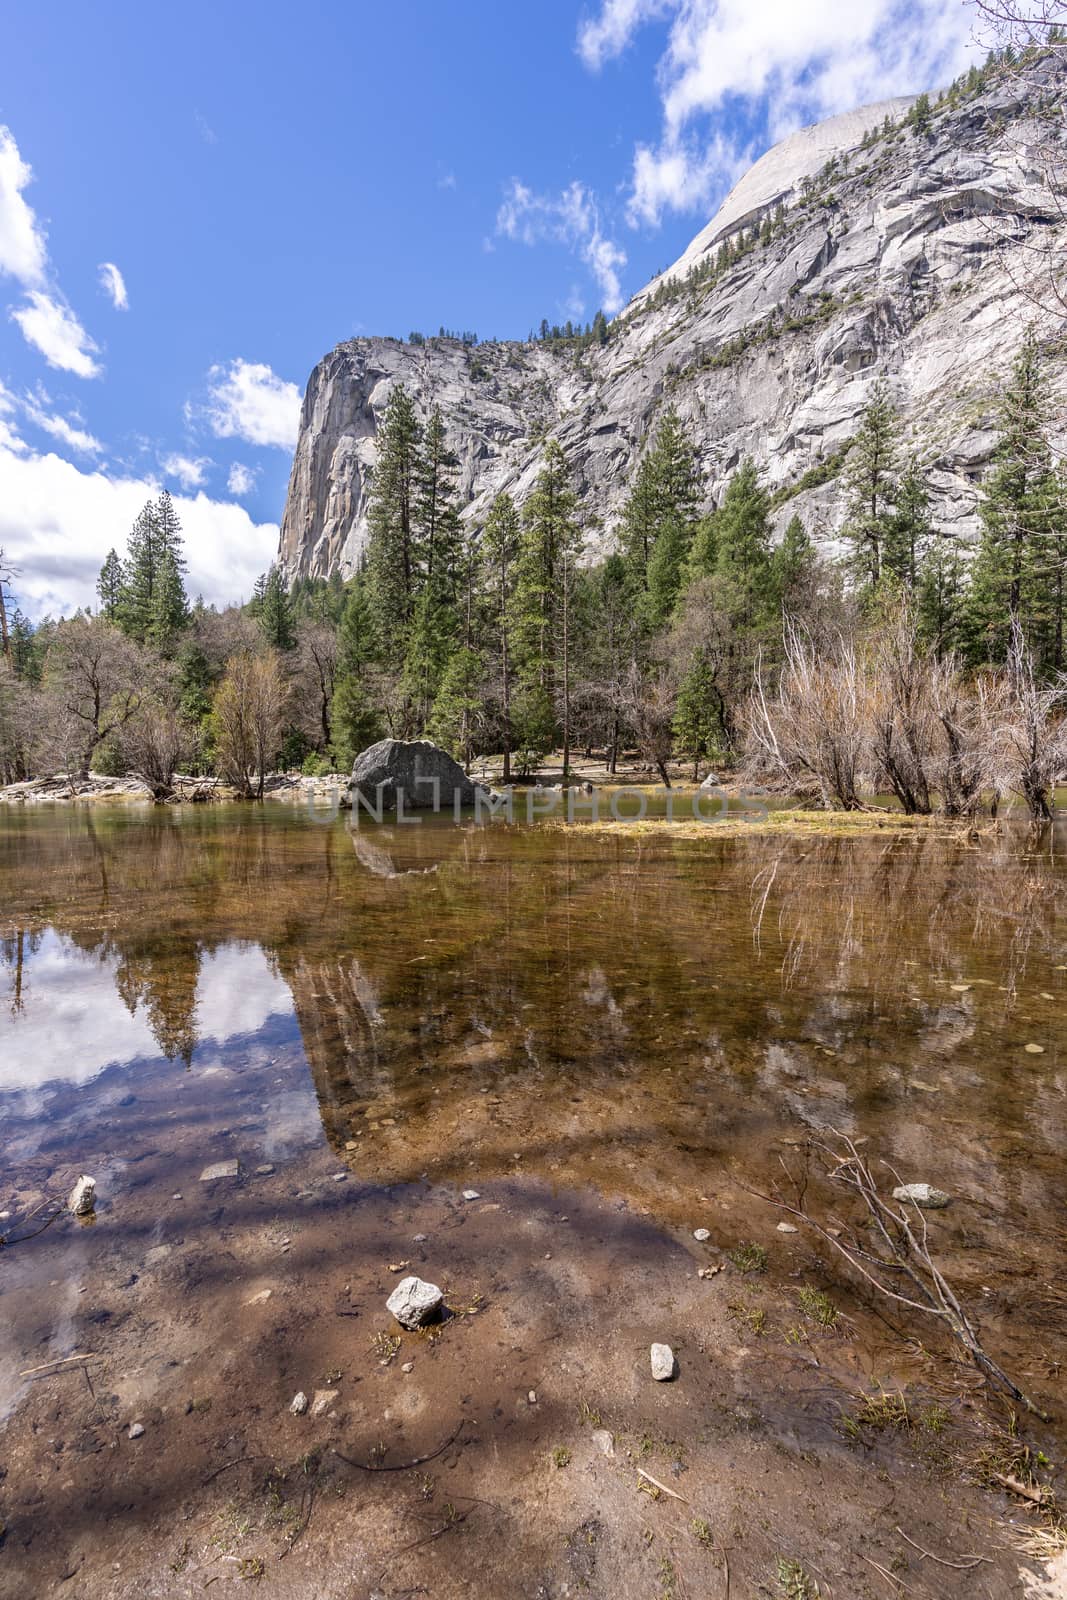 Mirror Lake Yosemite National Park  by vichie81